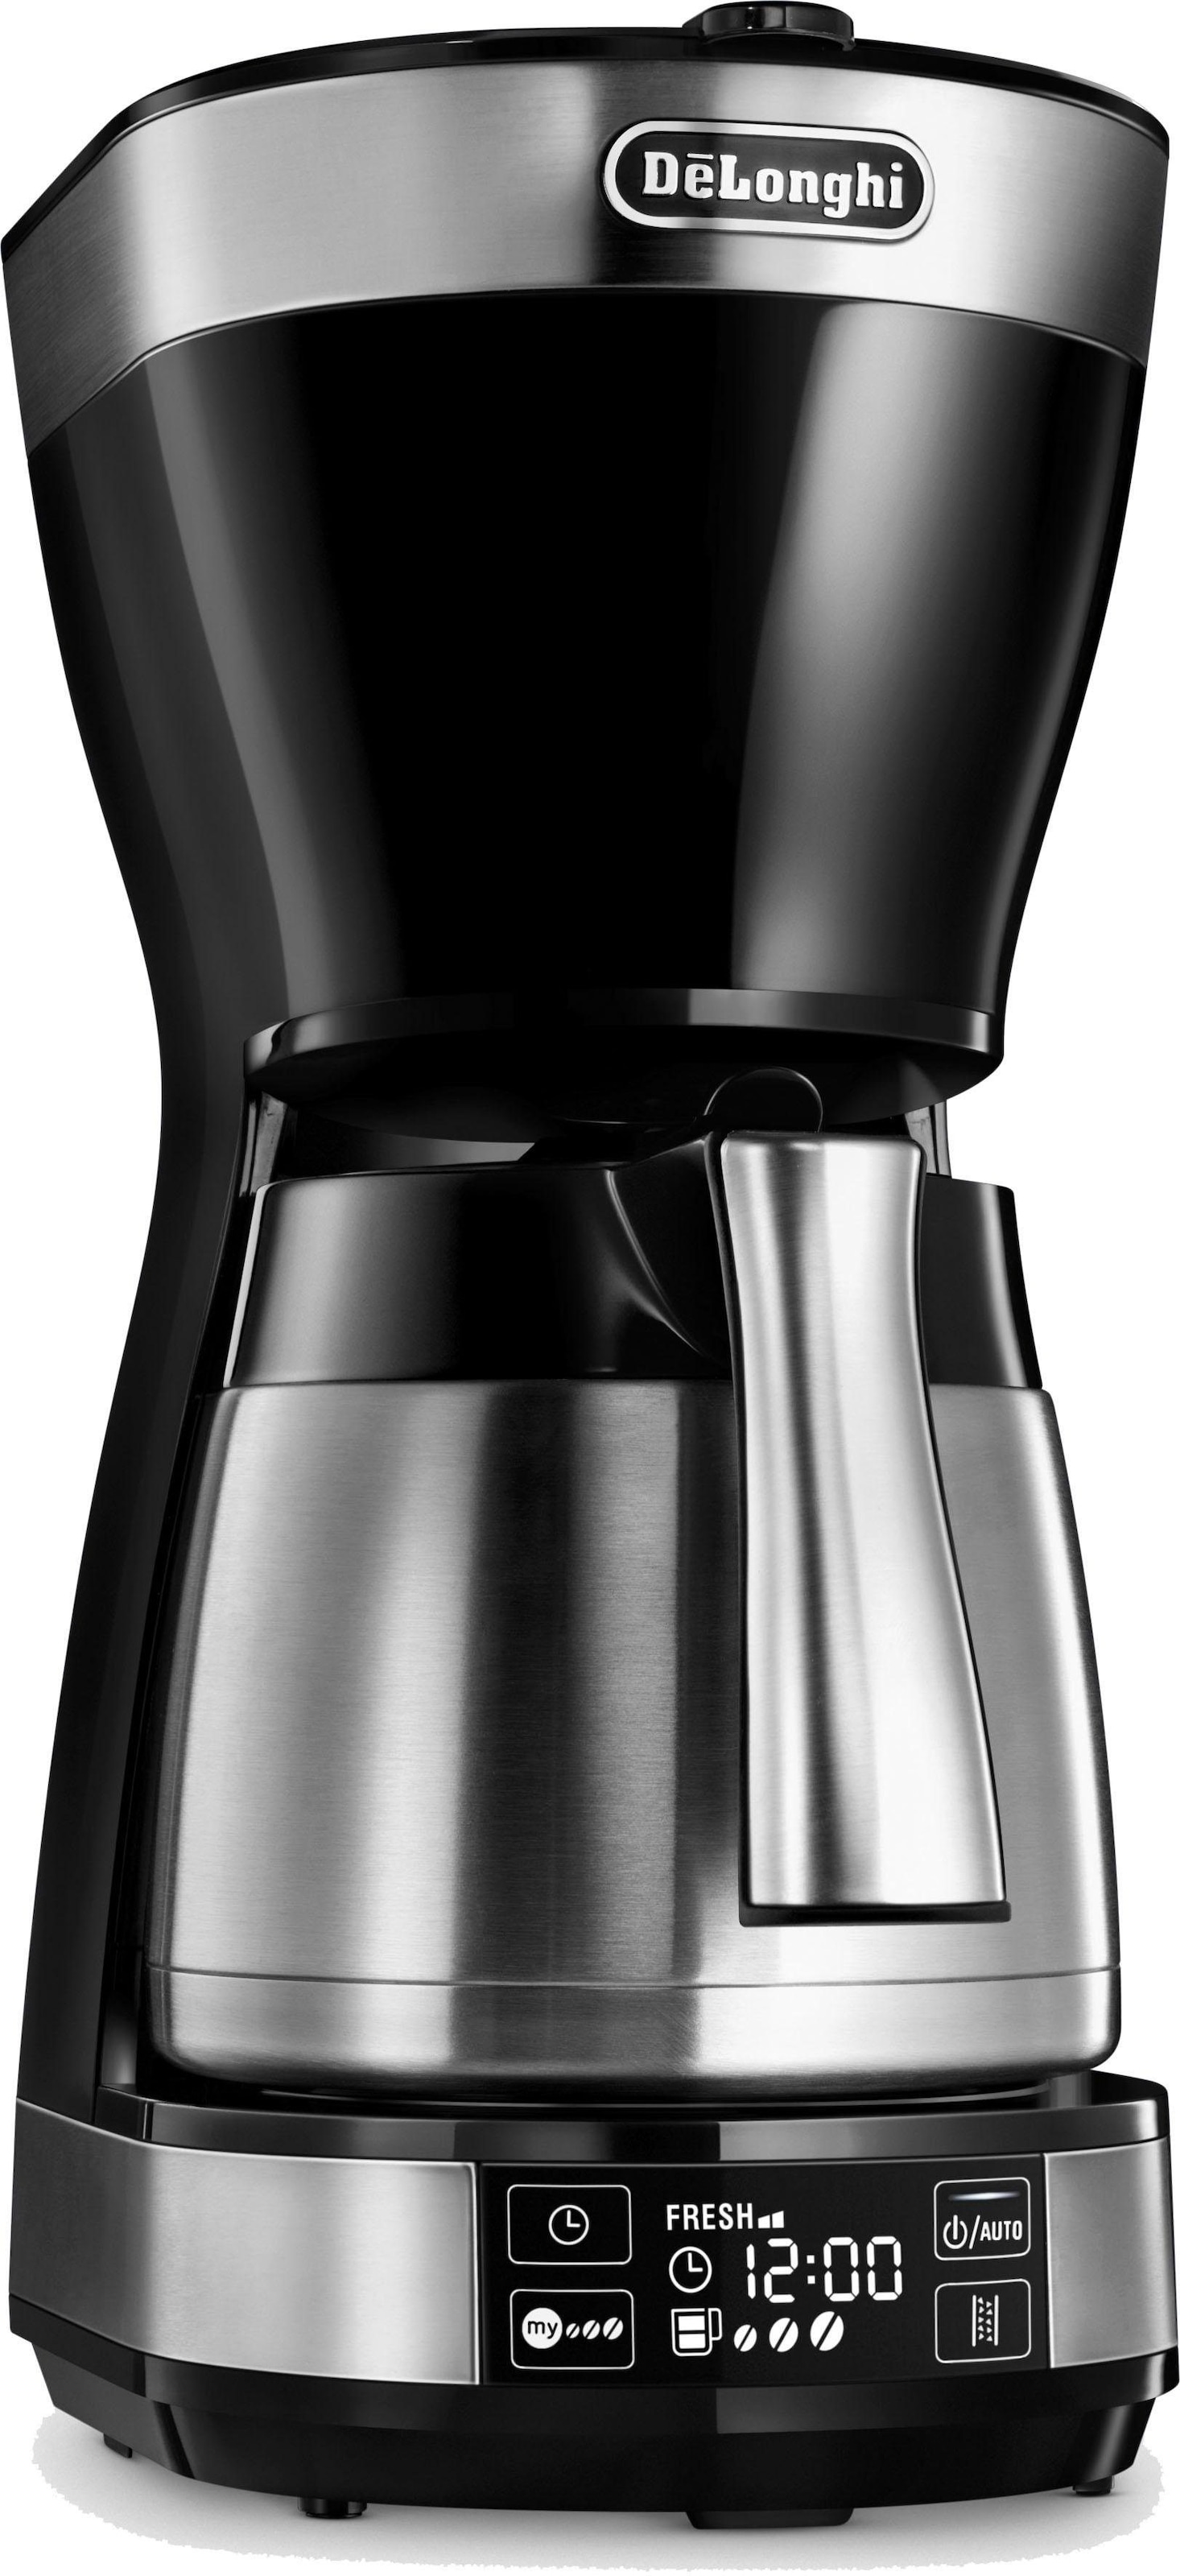 Filterkaffeemaschine »ICM 16731«, 1,25 l Kaffeekanne, Papierfilter